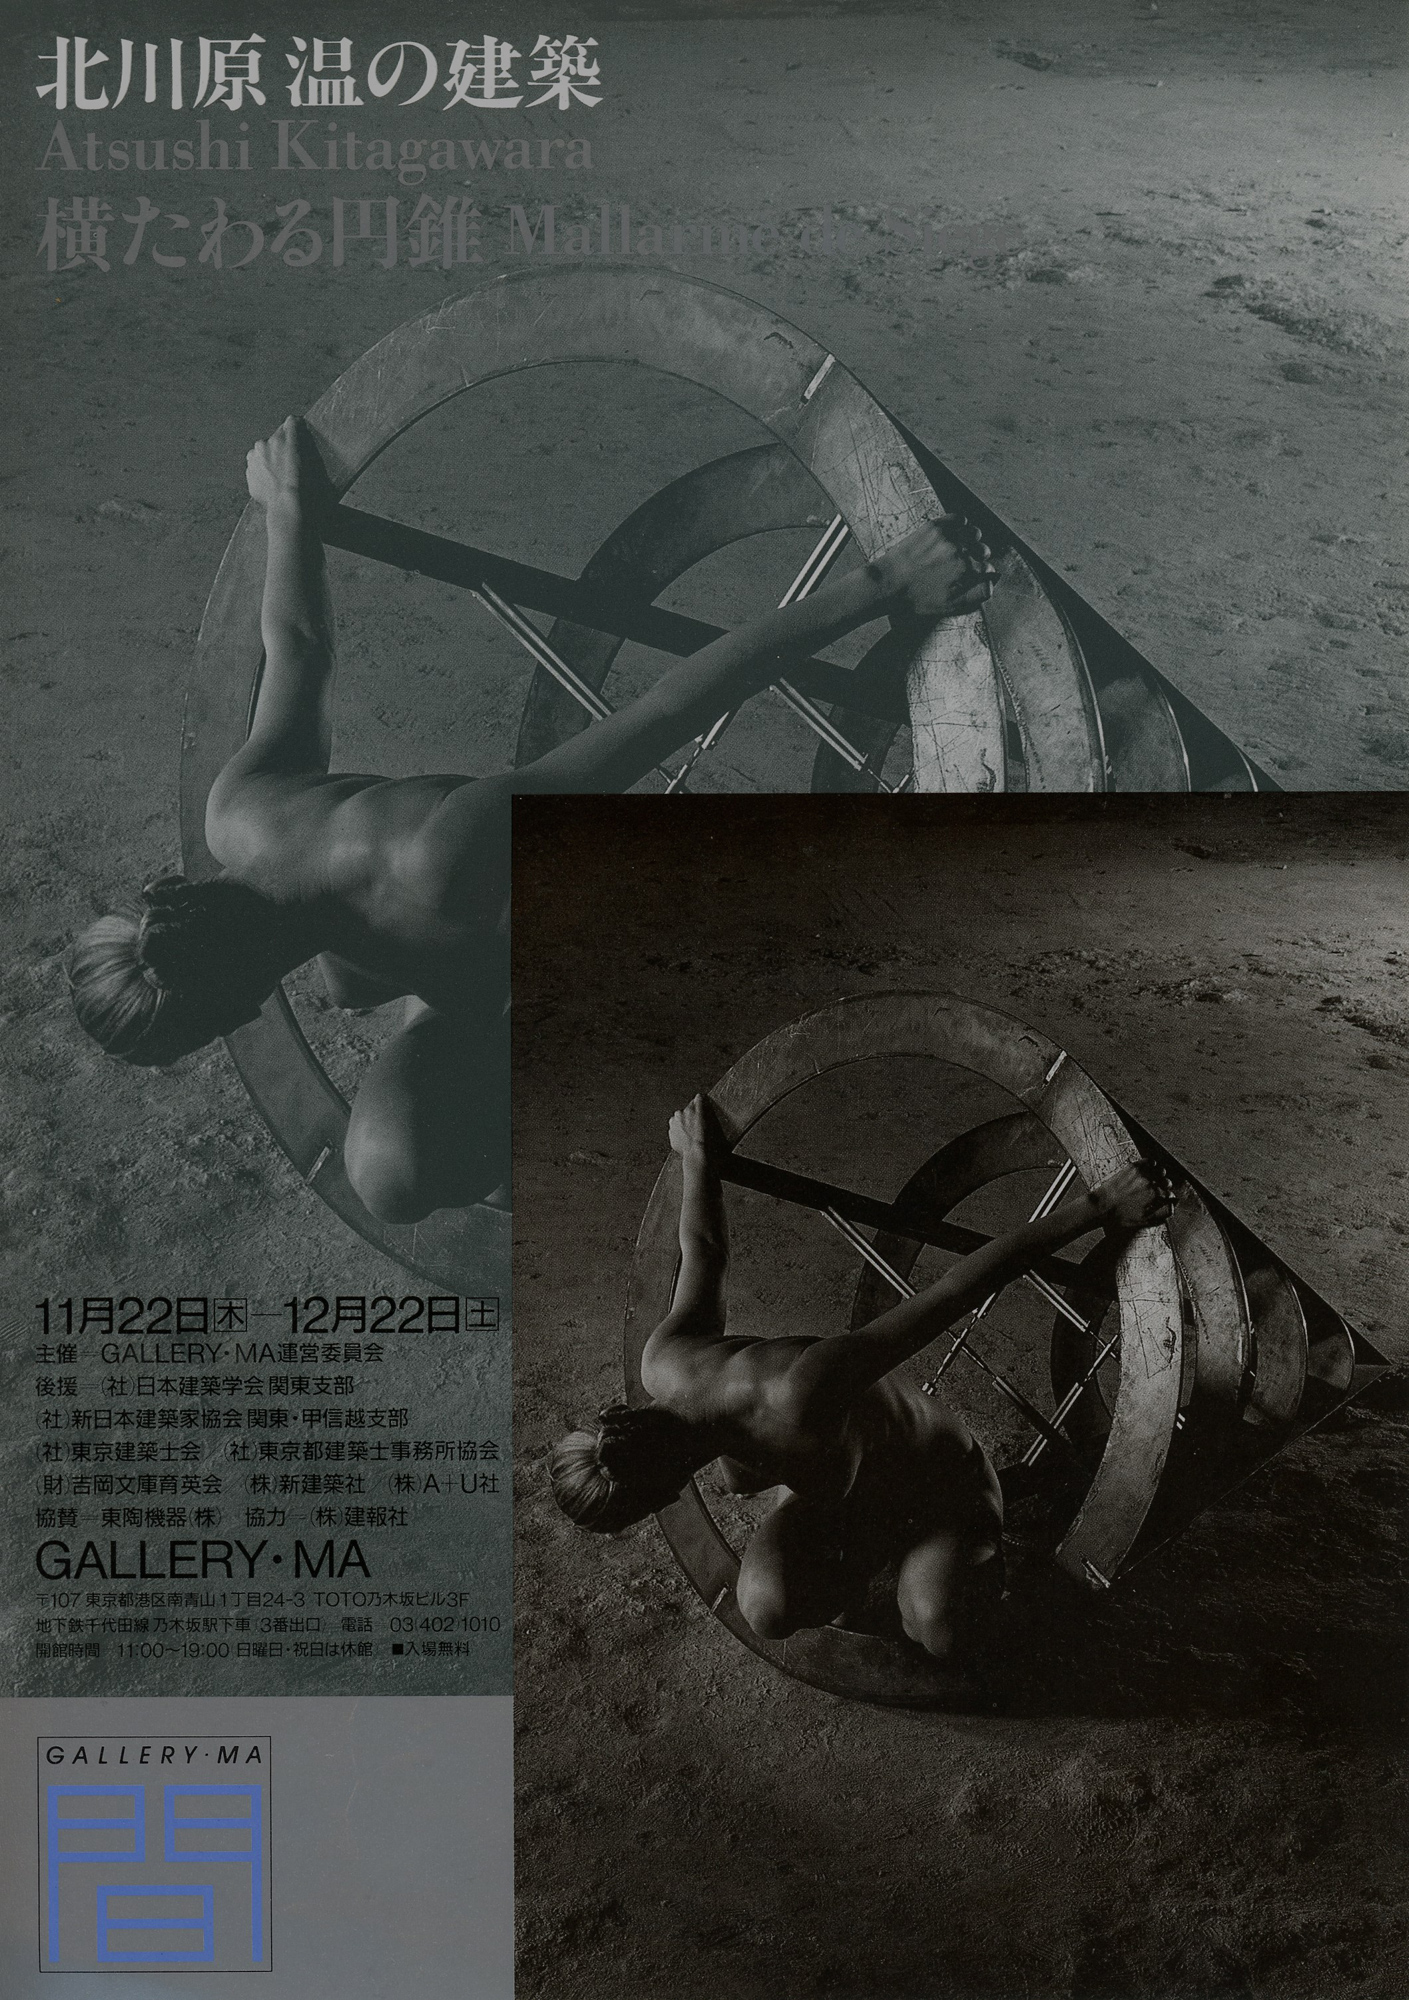 Poster For The Exhibition of Atsushi Kitagawara at Gallery- Ma Art direction/design – Ikko Tanaka Photography – Yuriko Takagi